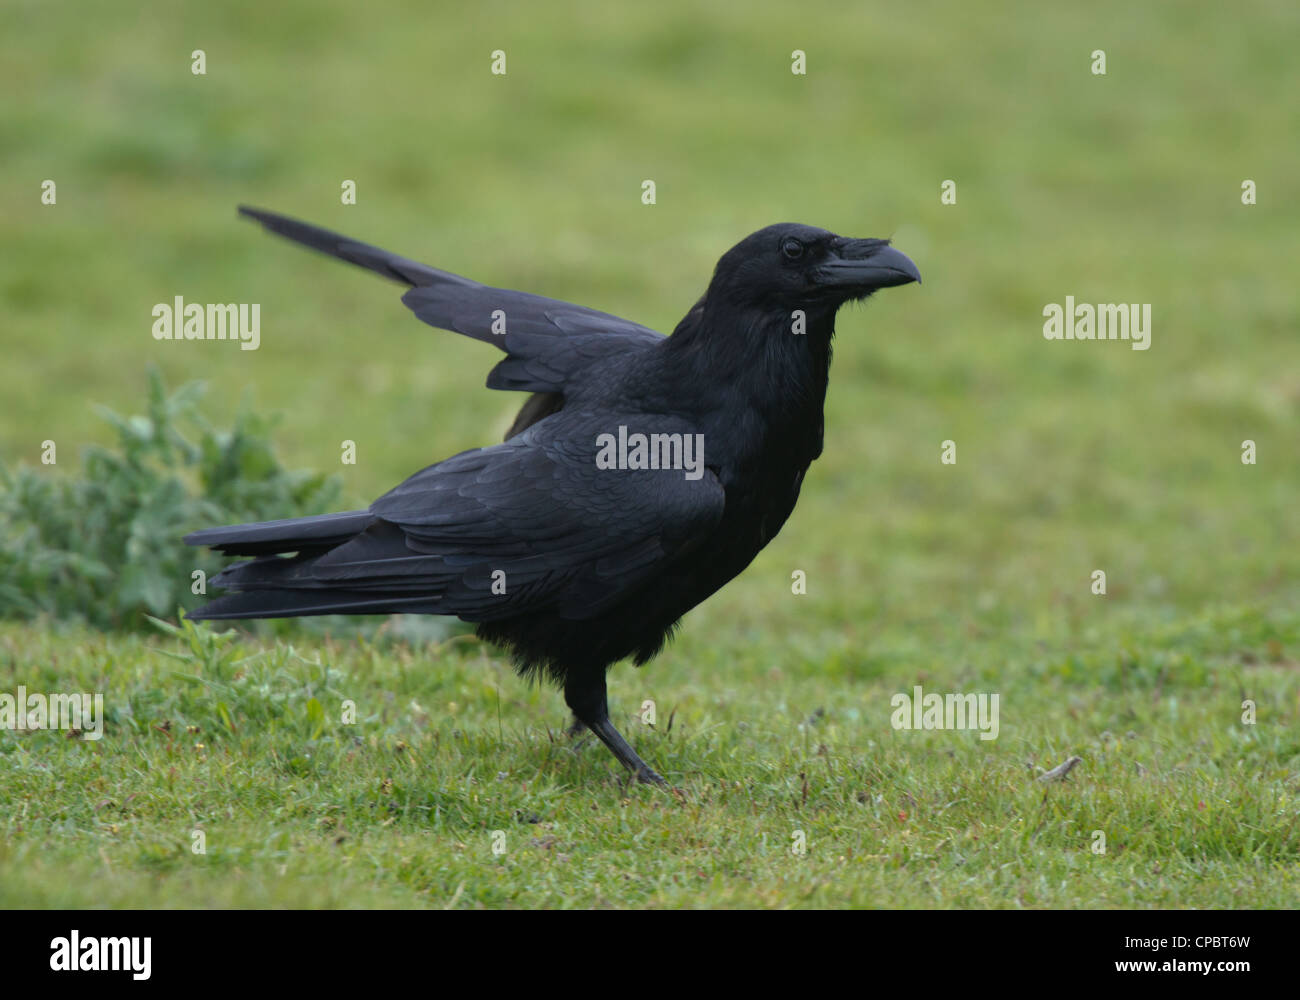 Corvus coraxm, Raven on grass Stock Photo